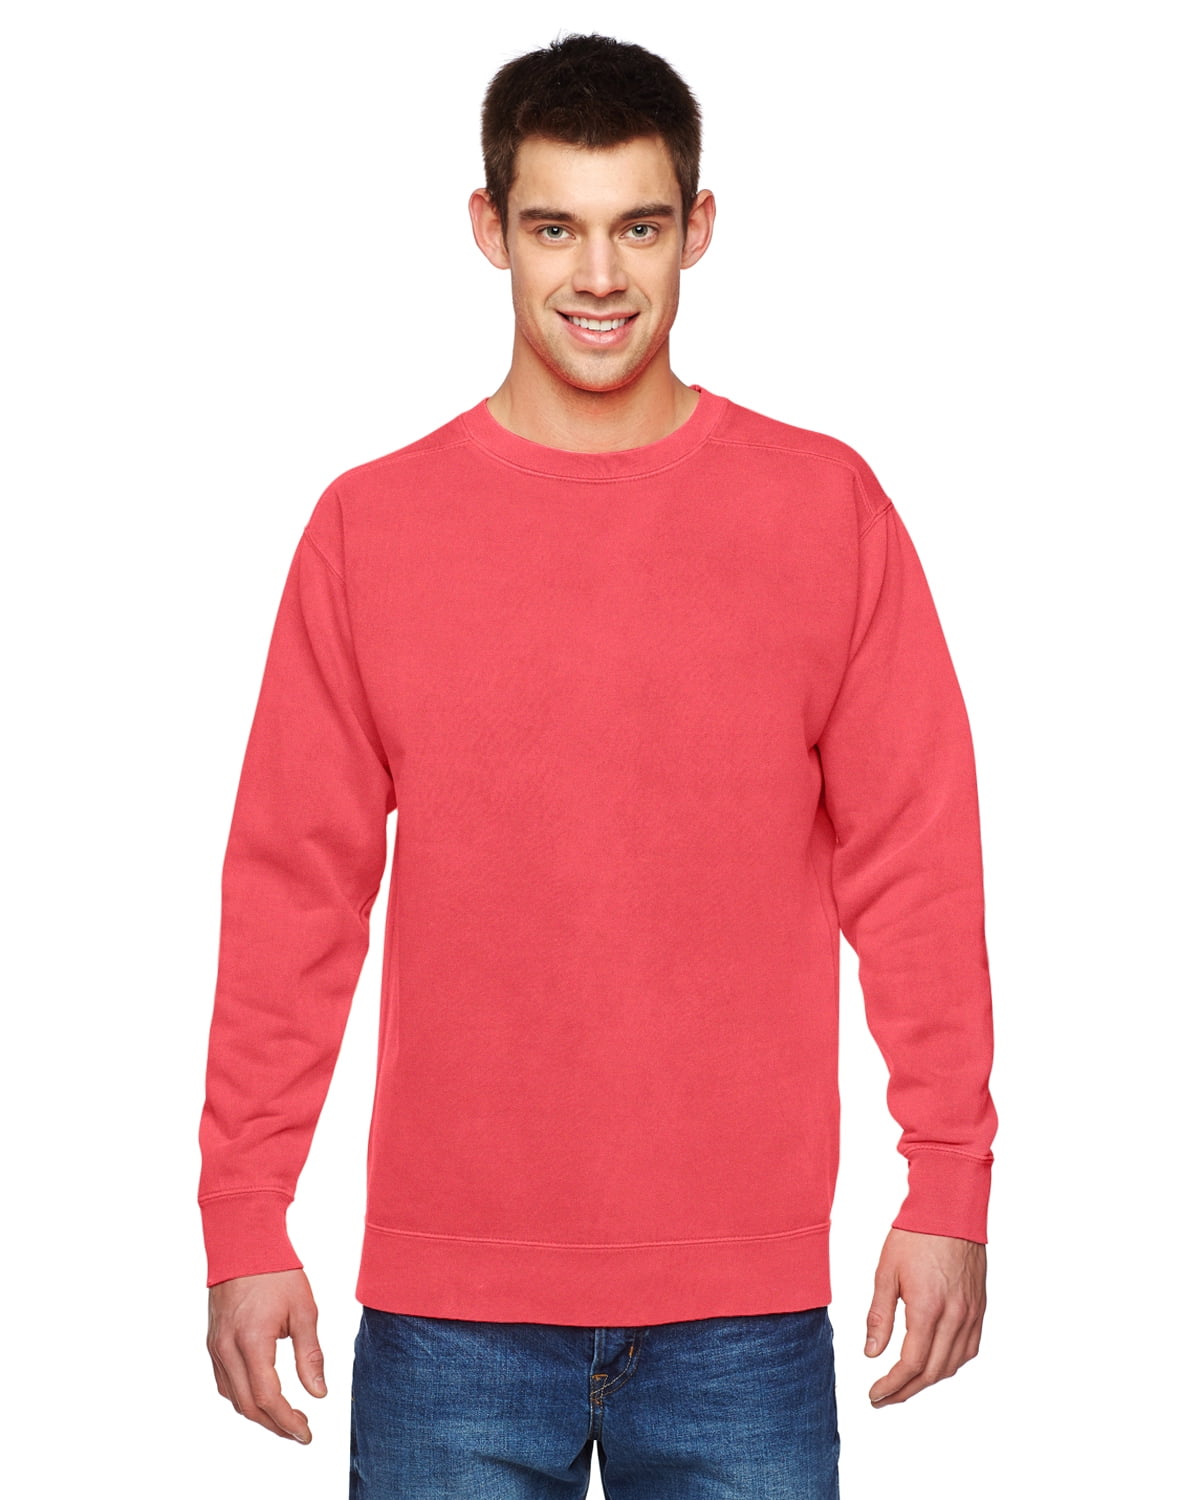 INK STITCH Unisex Custom 1566 Garment Dyed Design Your Own Sweatshirts Multicolors